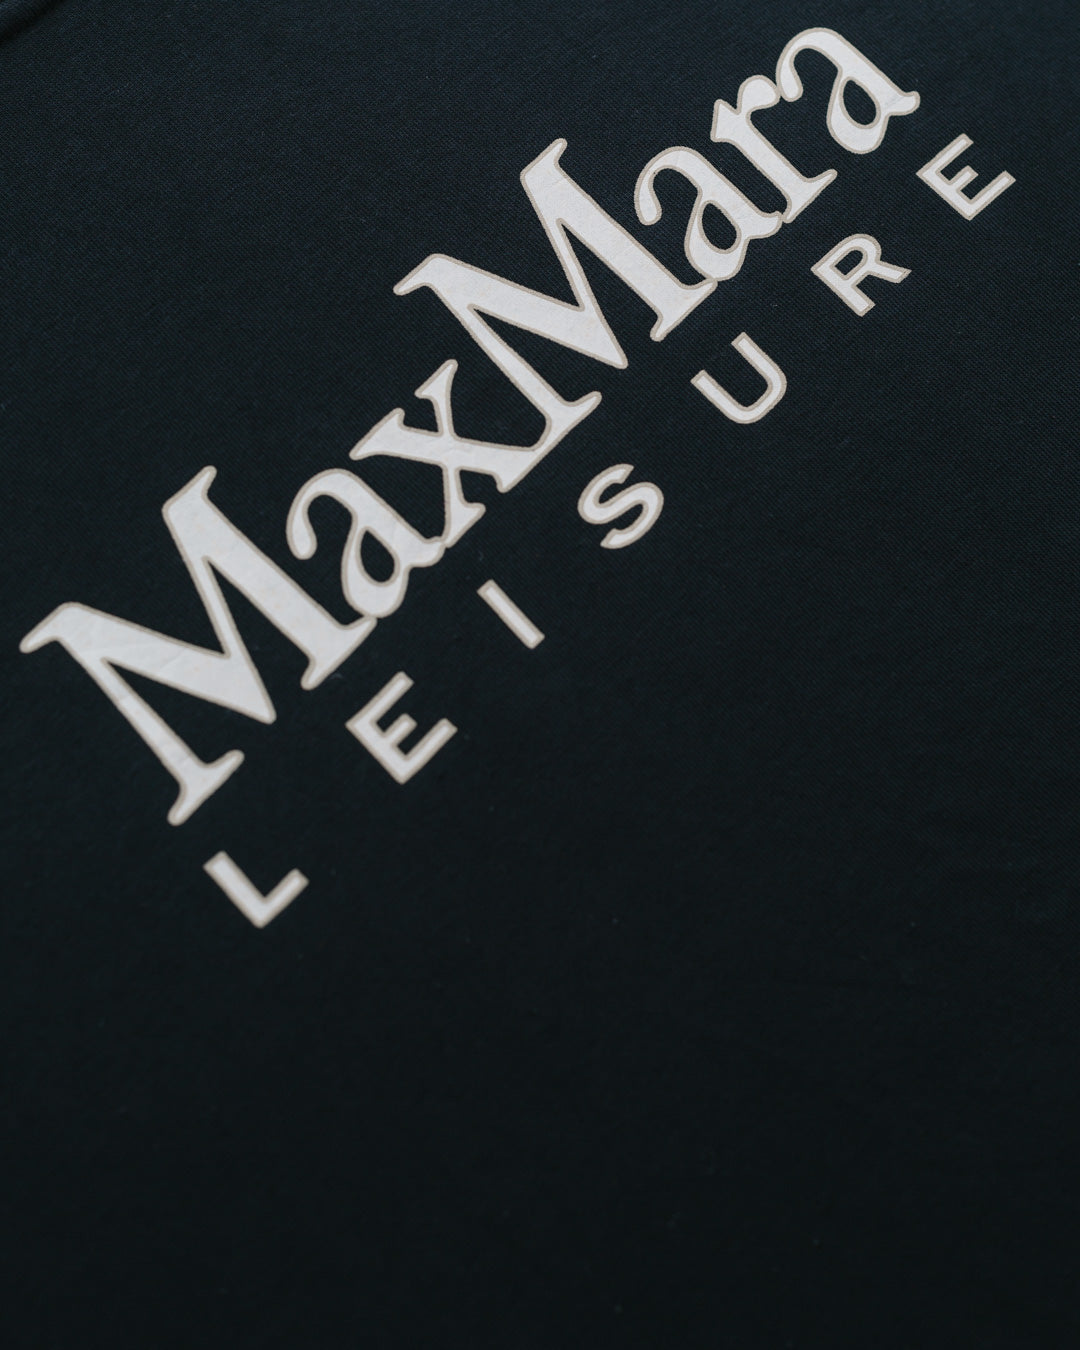 Maxmara leisure logo hooded sweatshirt